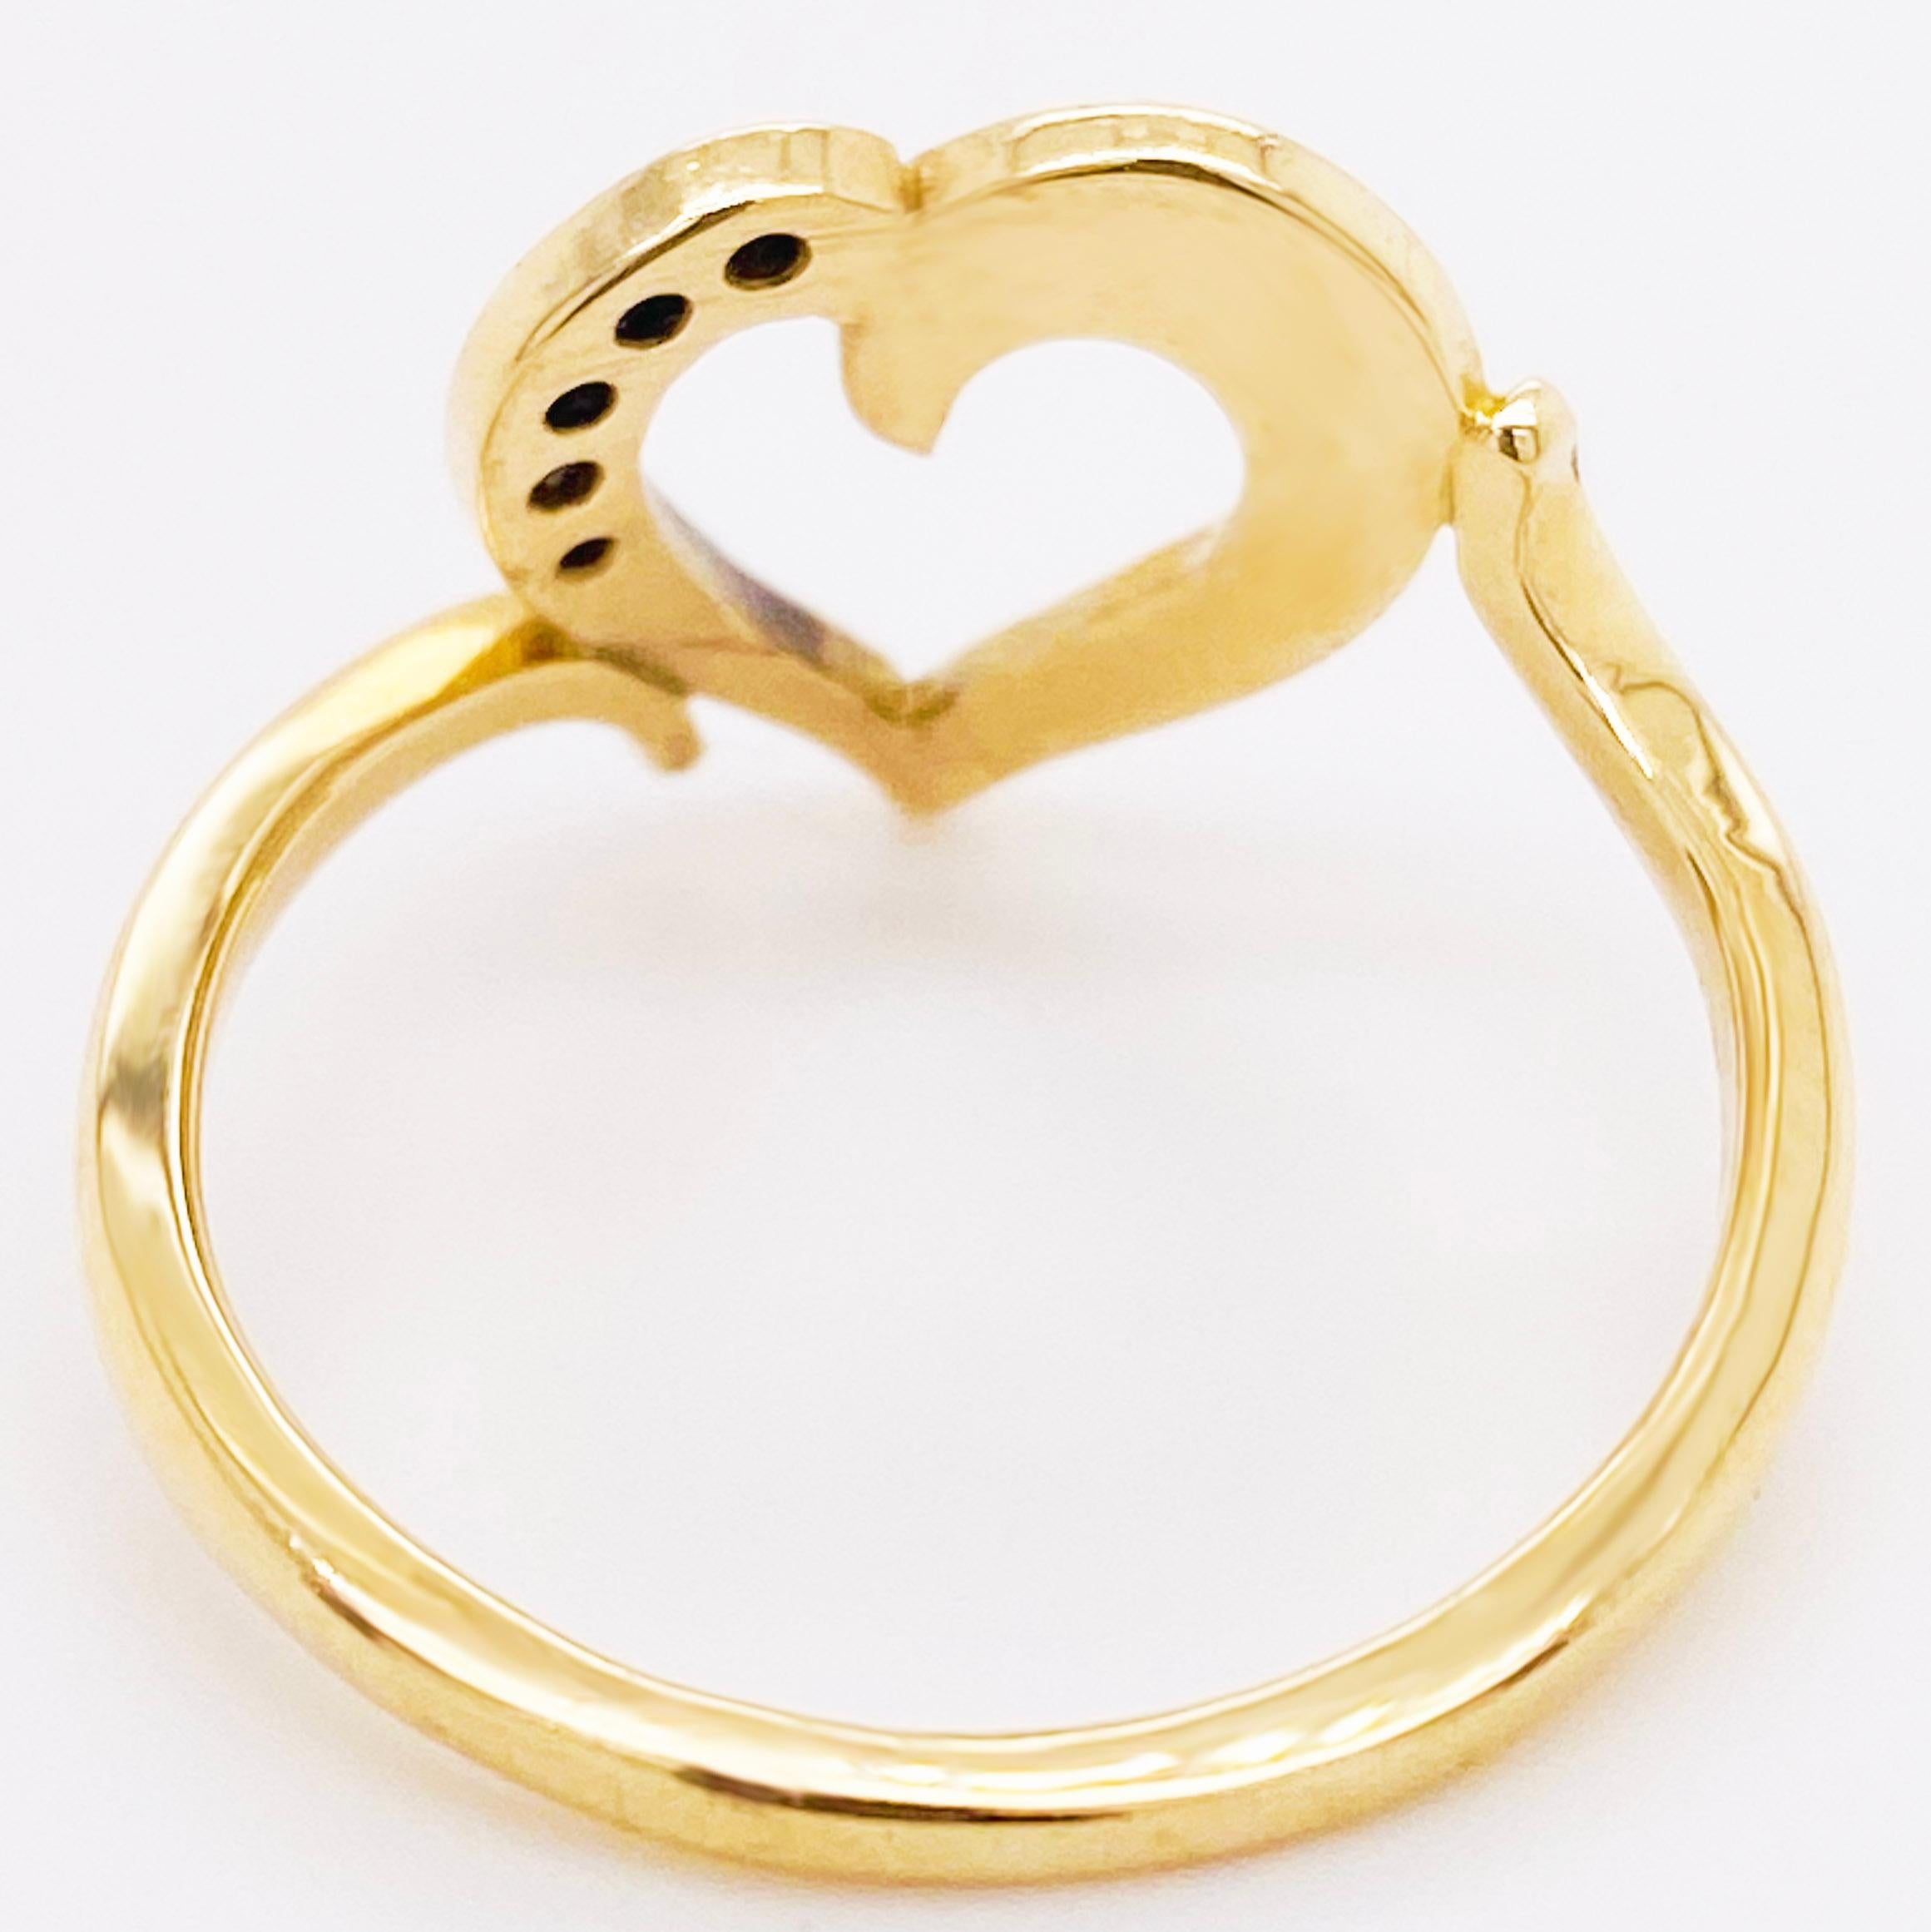 Modern Diamond Heart Ring, Yellow Gold, Open Heart Ring, Promise Ring, Romantic Ring For Sale